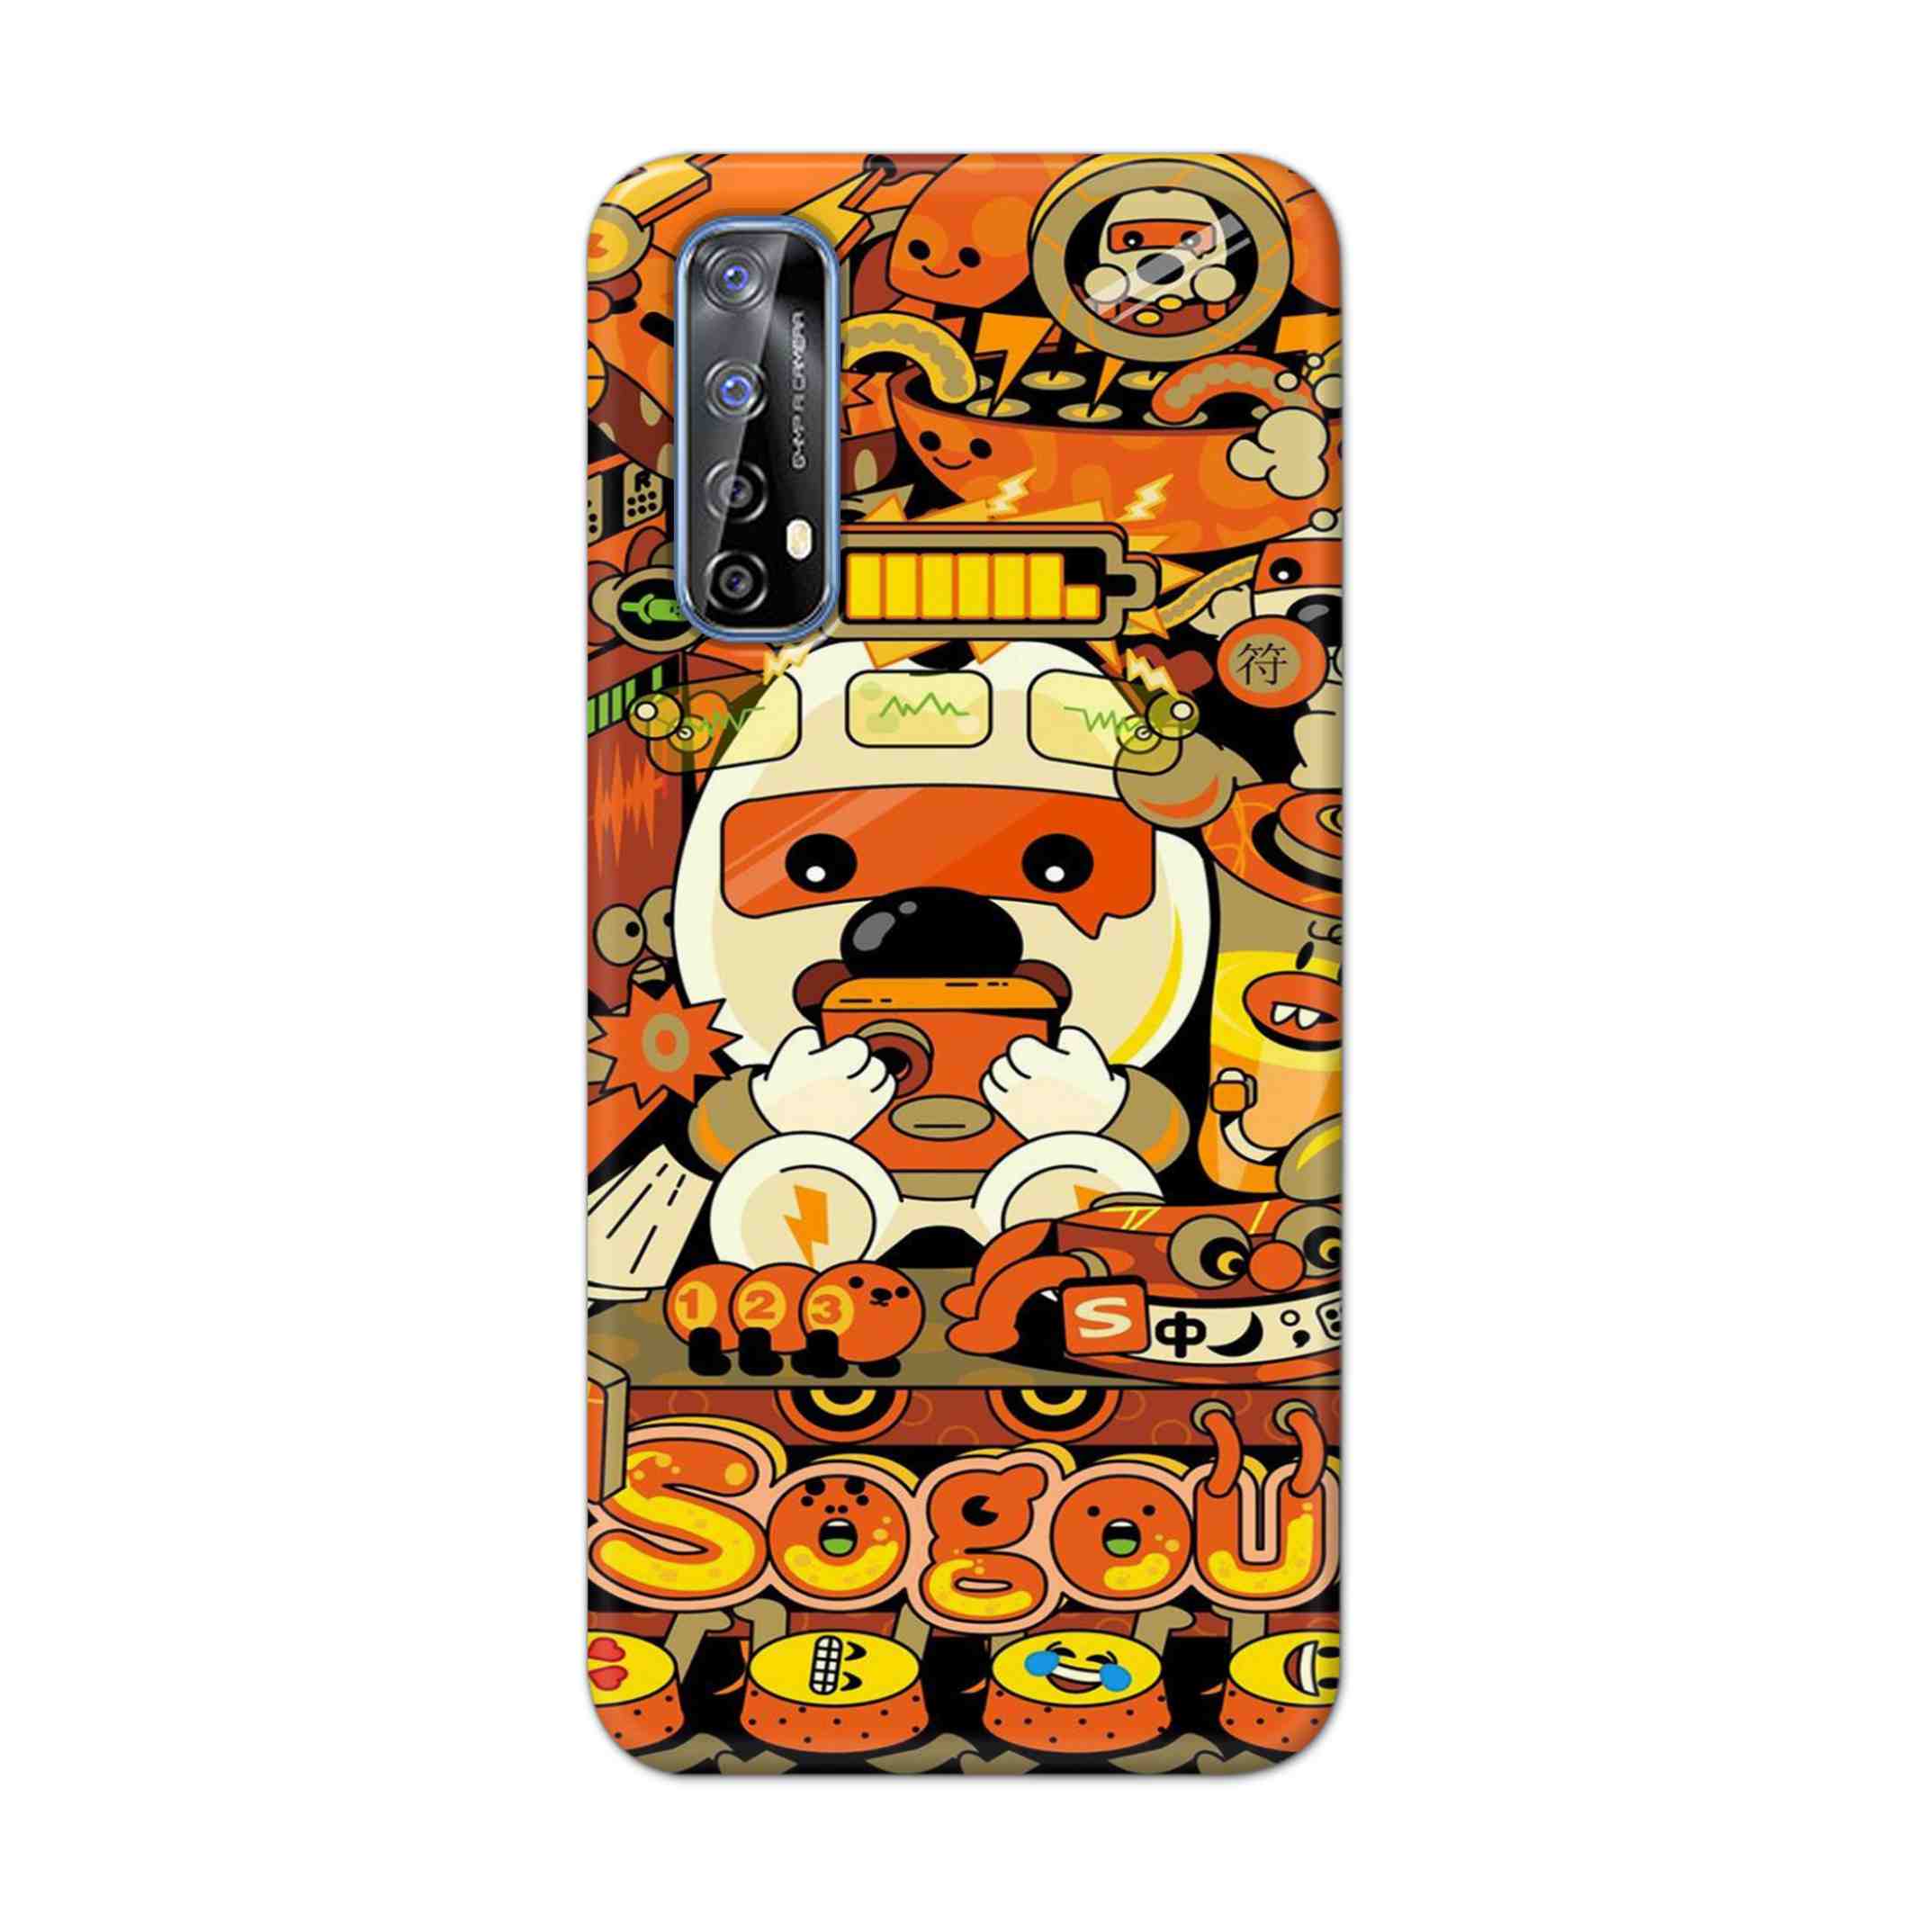 Buy Sogou Hard Back Mobile Phone Case Cover For Realme 7 Online